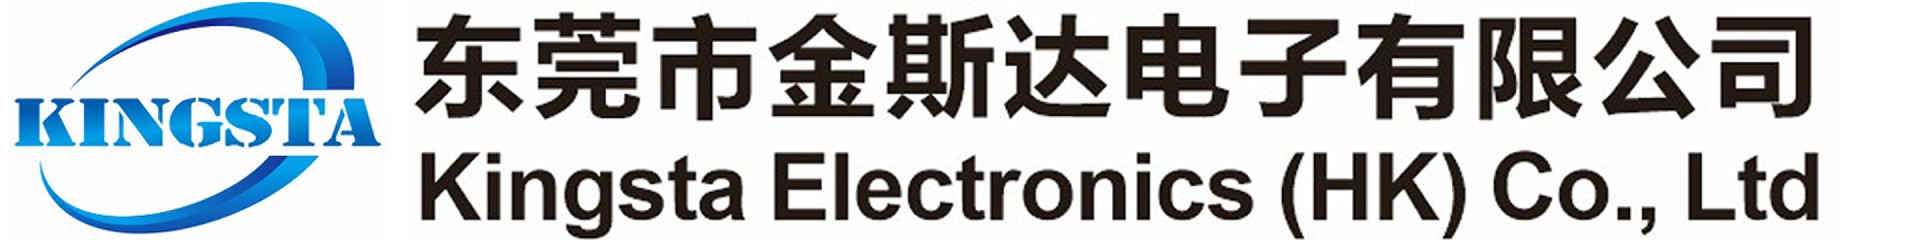 Kingsta Electronics Co., Ltd